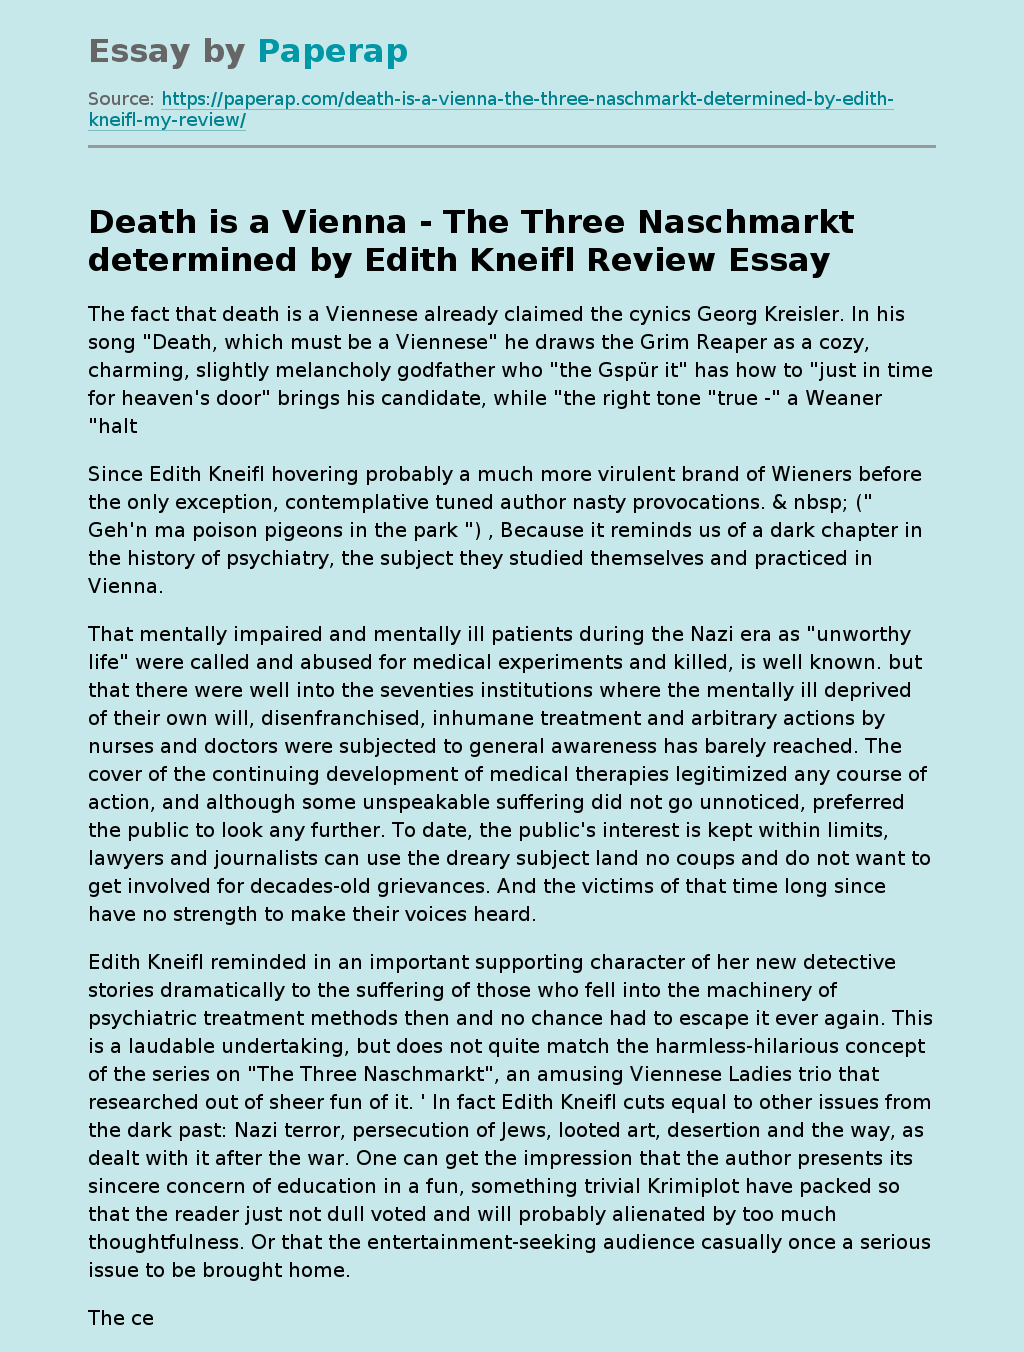 "Death is a Vienna" by Edith Kneifl